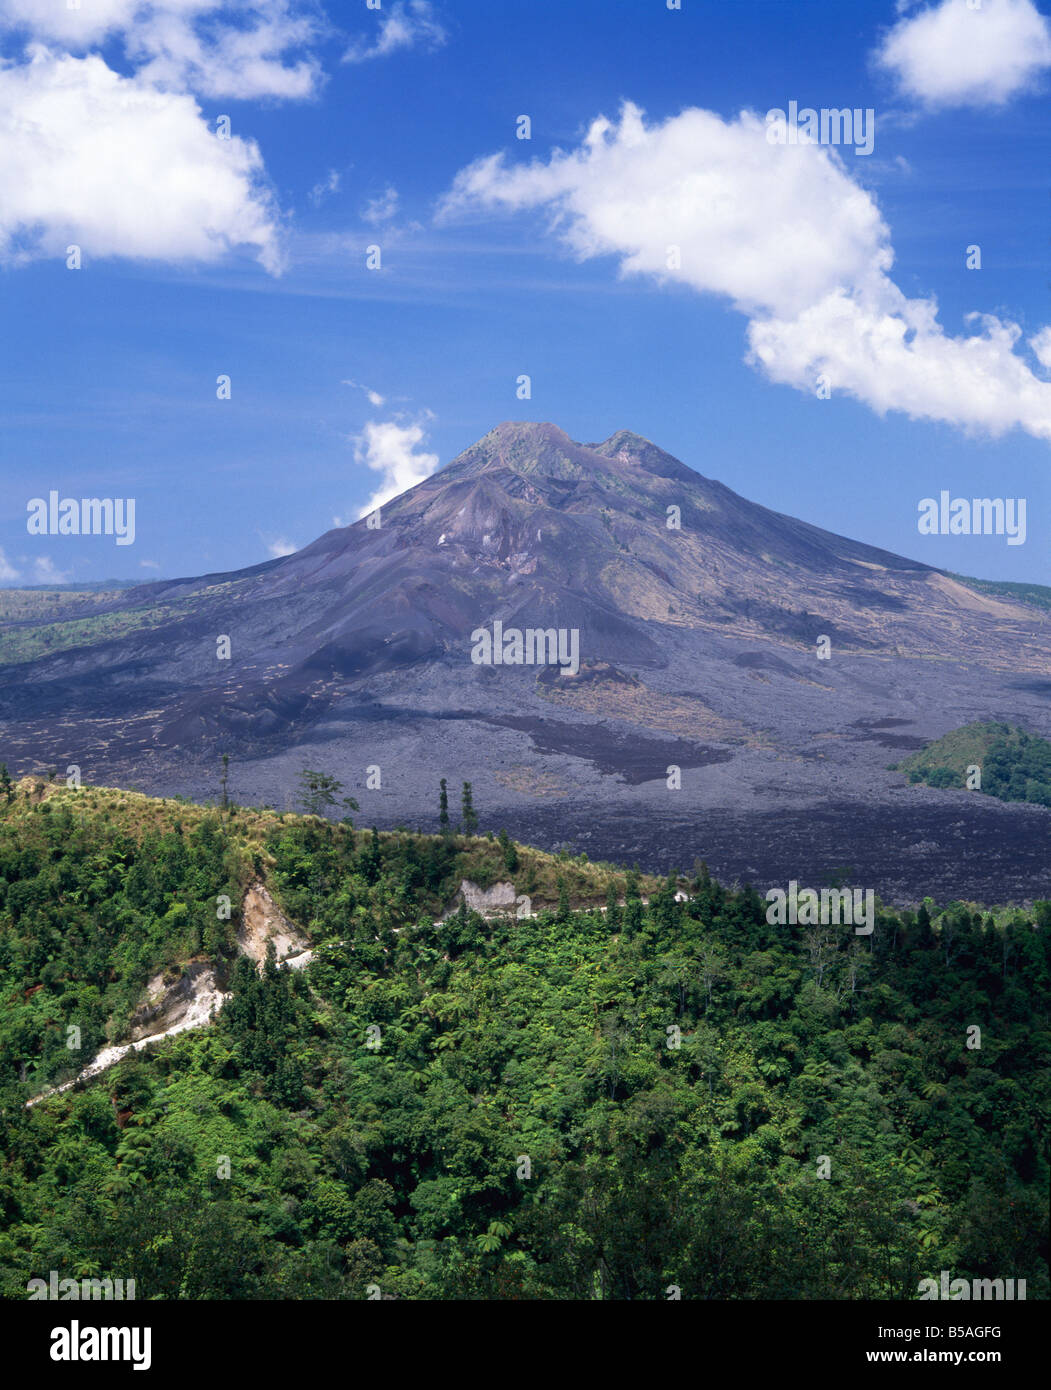 Vulcanico Monte Batur Bali Indonesia Asia del sud-est asiatico Foto Stock